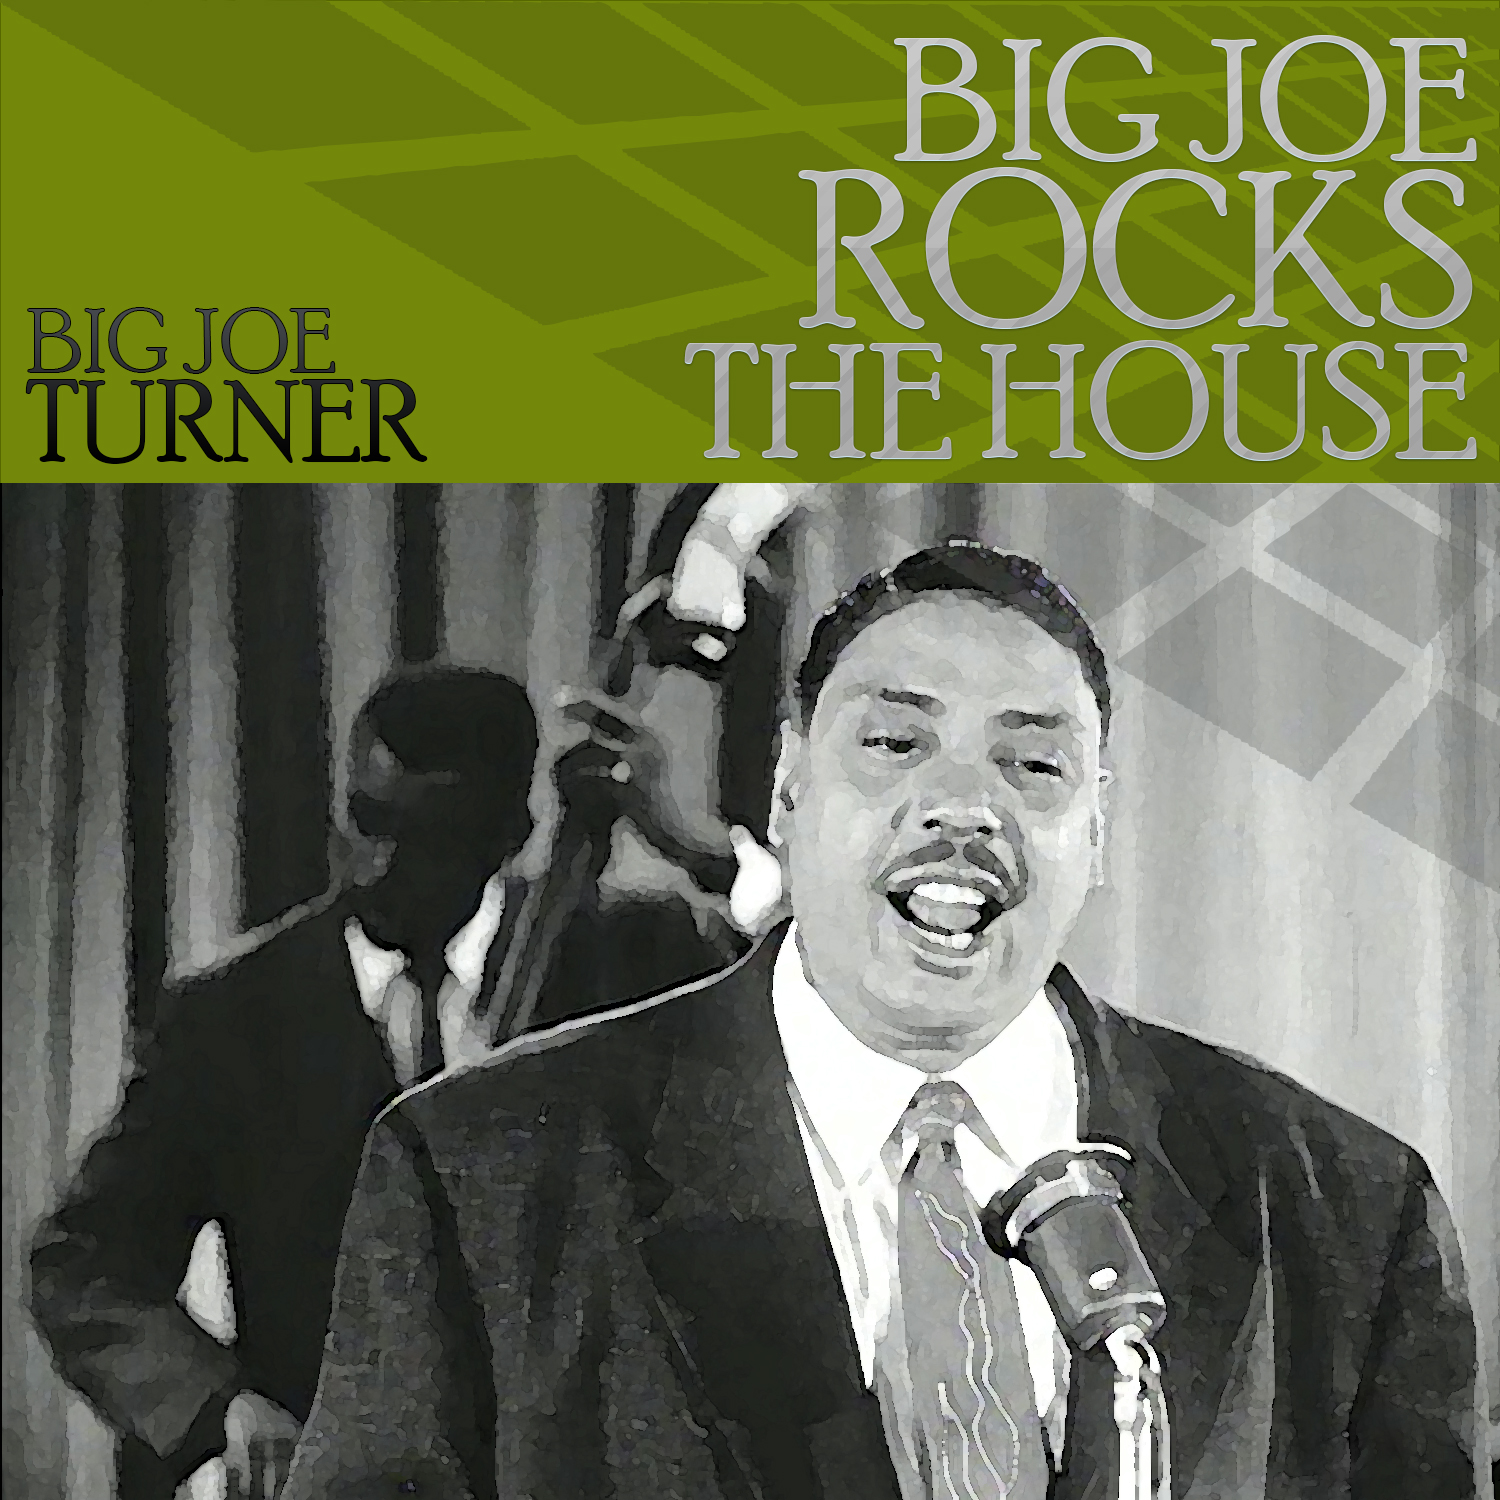 Big Joe Rocks the House: Vol 1 & 2 by Big Joe Turner